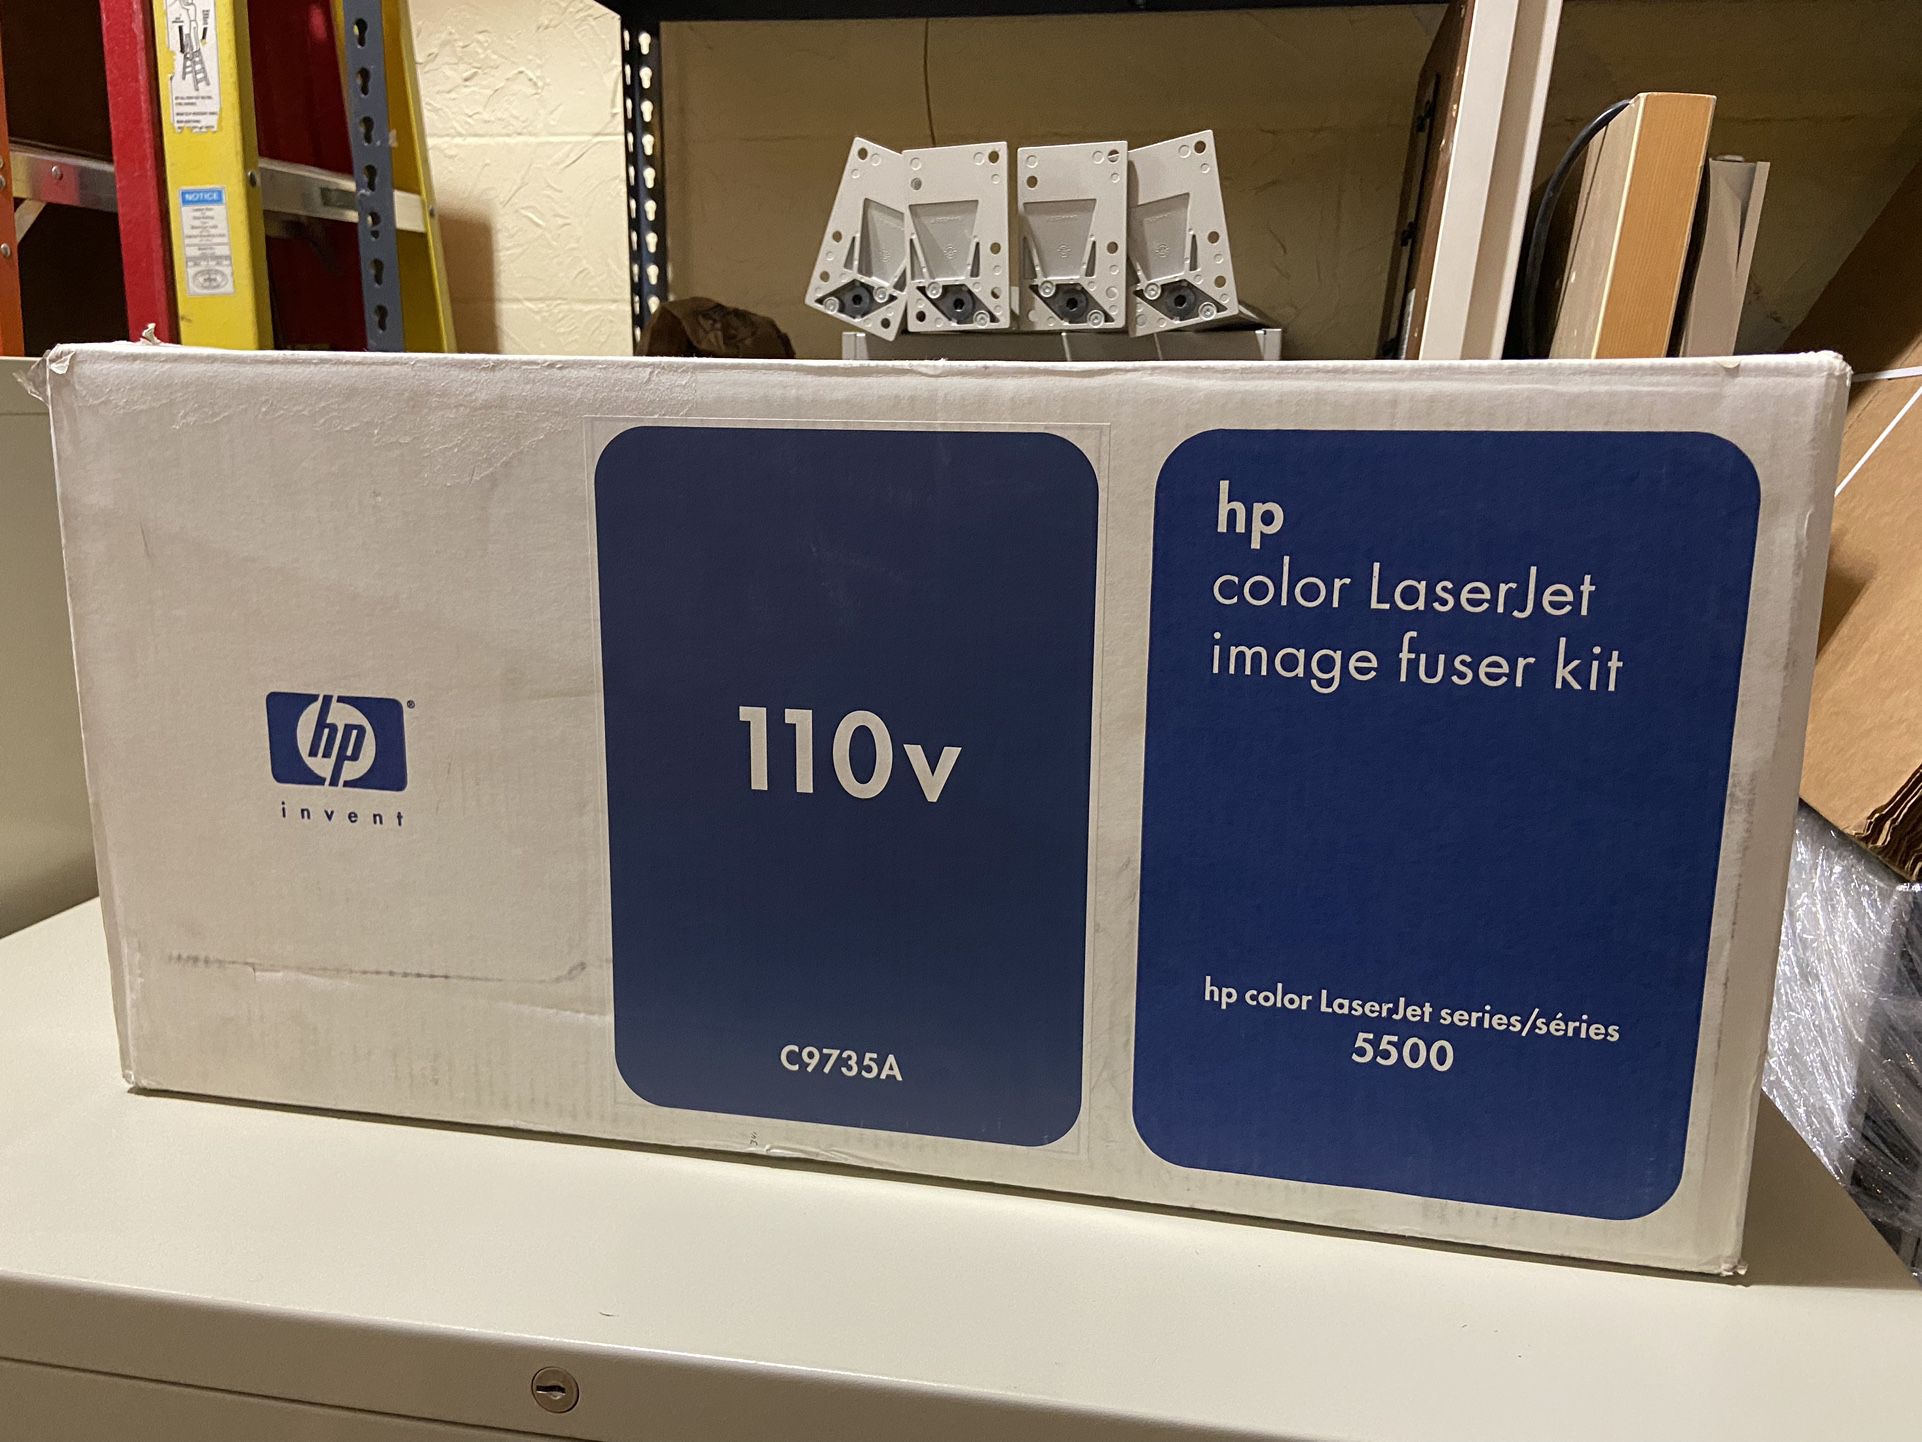 HP LaserJet 5500 Image Fuser Kit C9735A